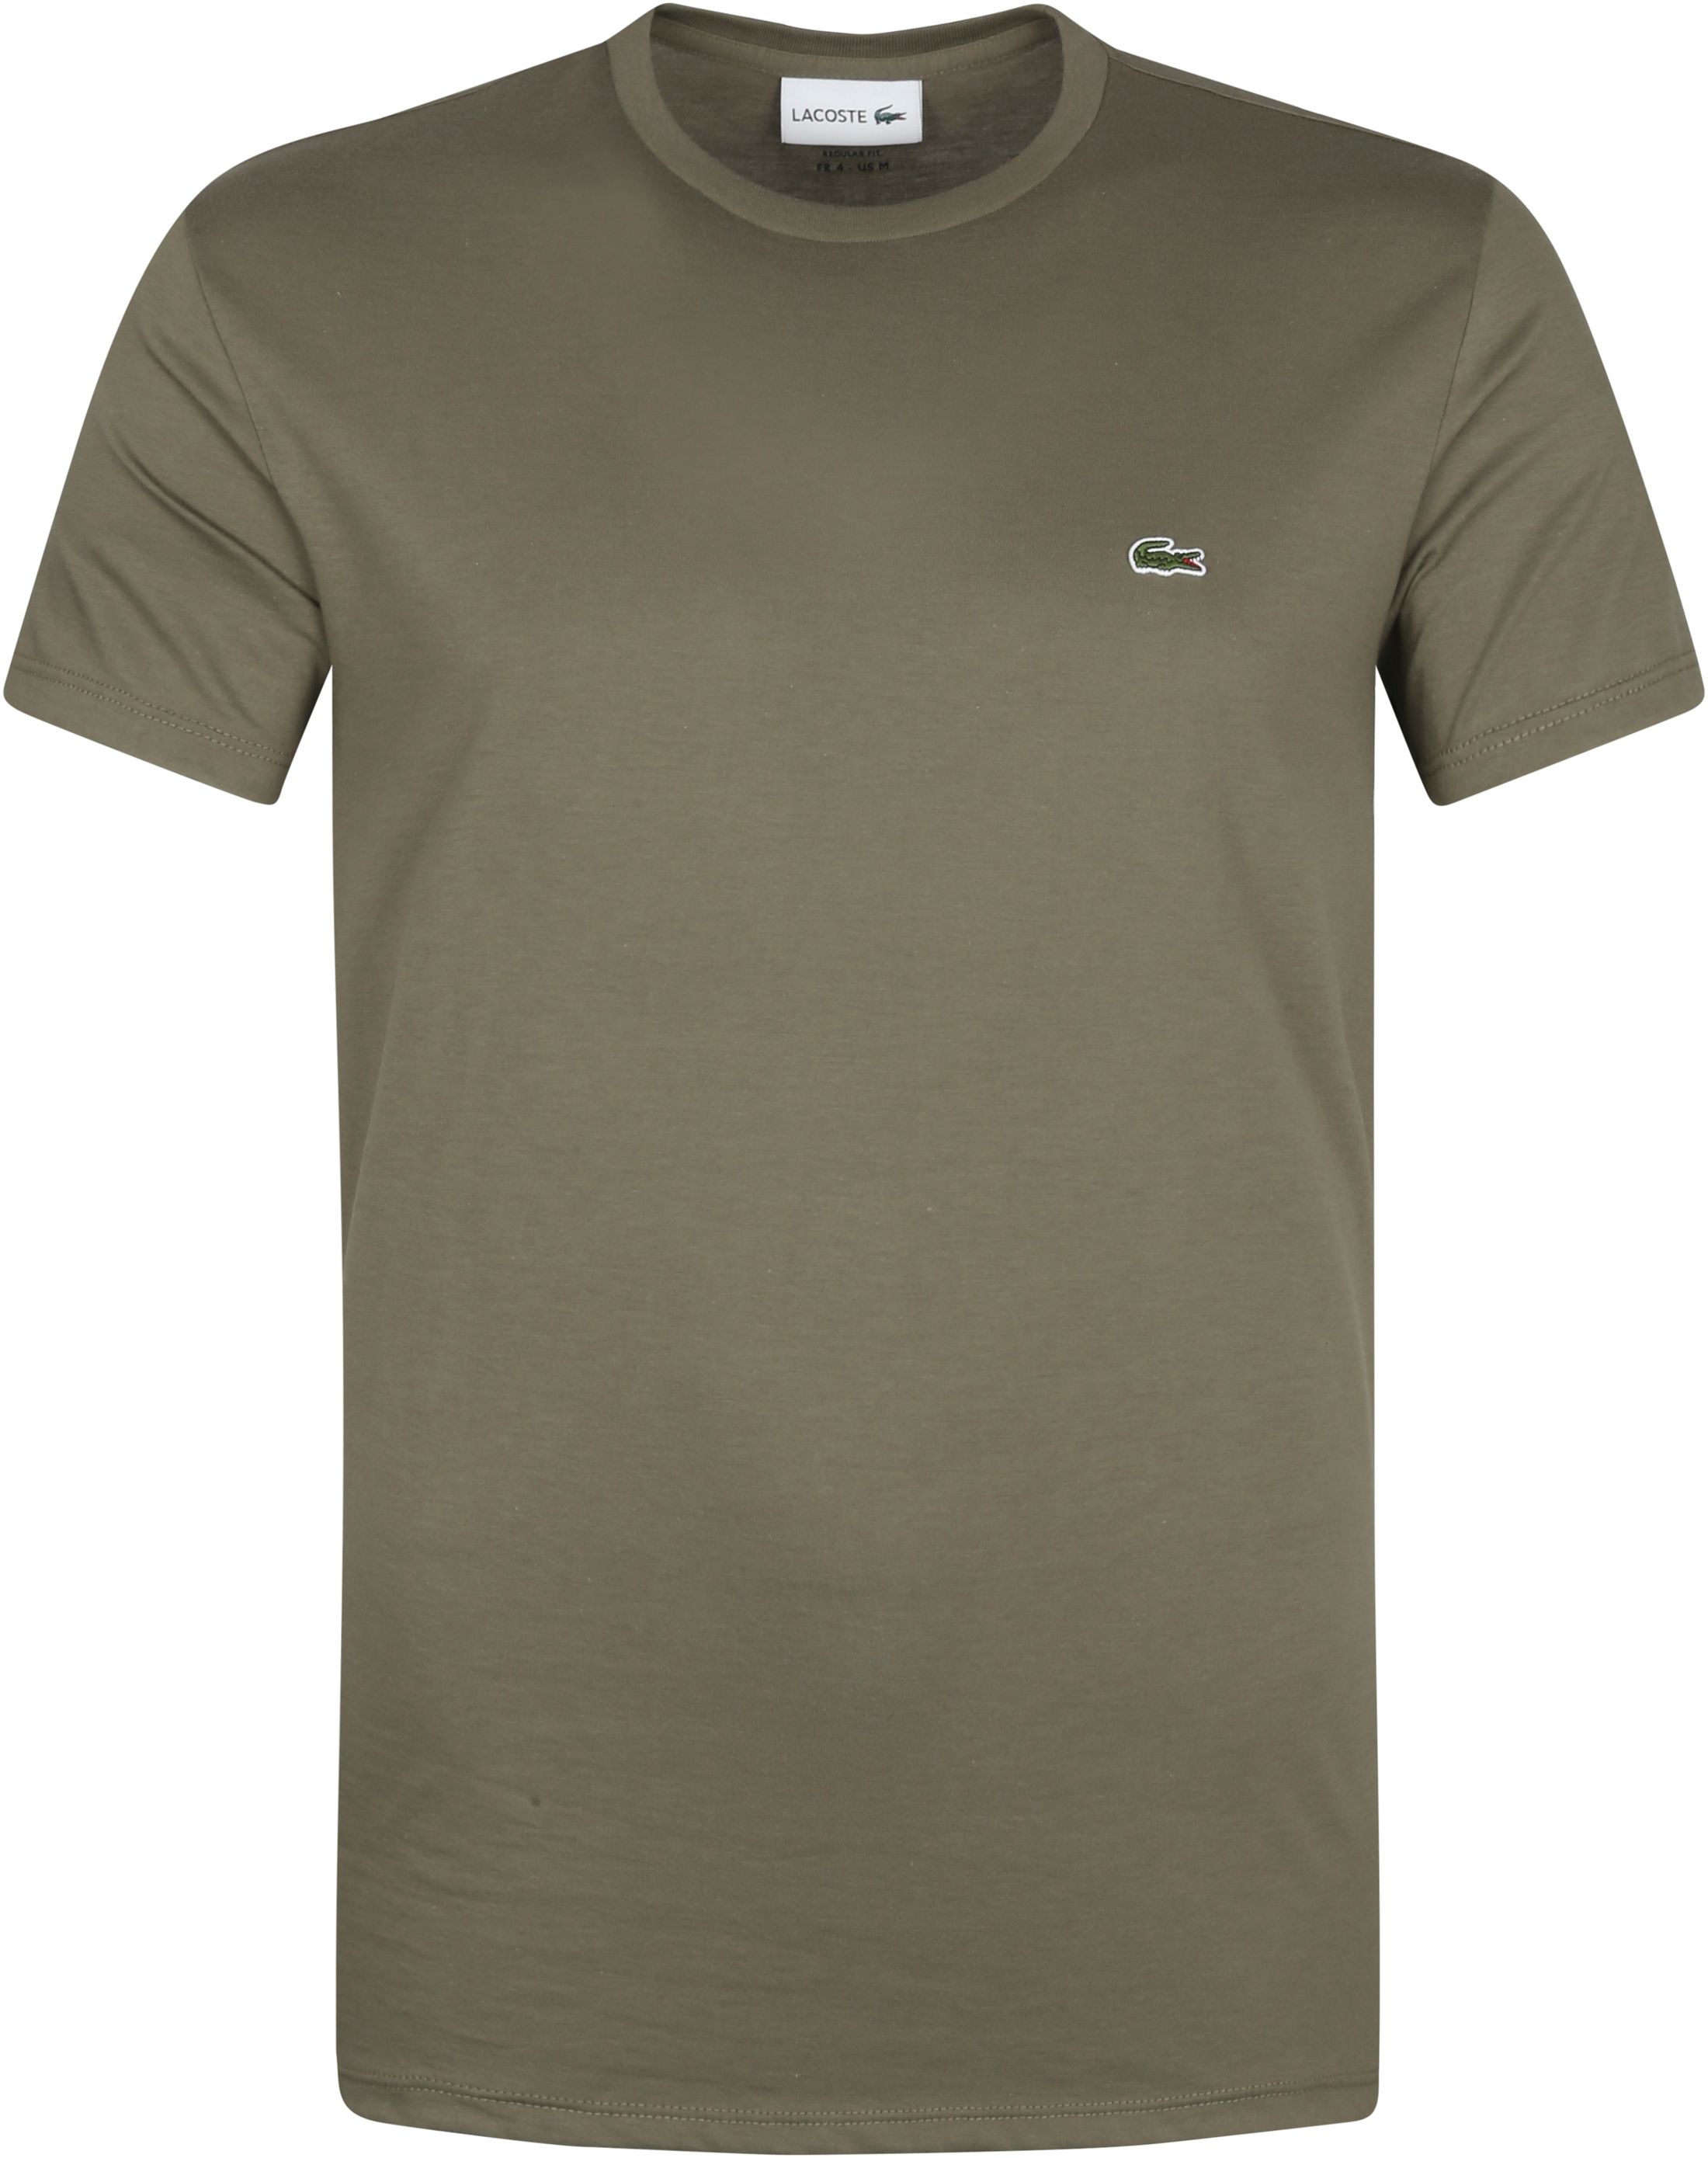 Lacoste T-Shirt Overview Green Khaki size 3XL